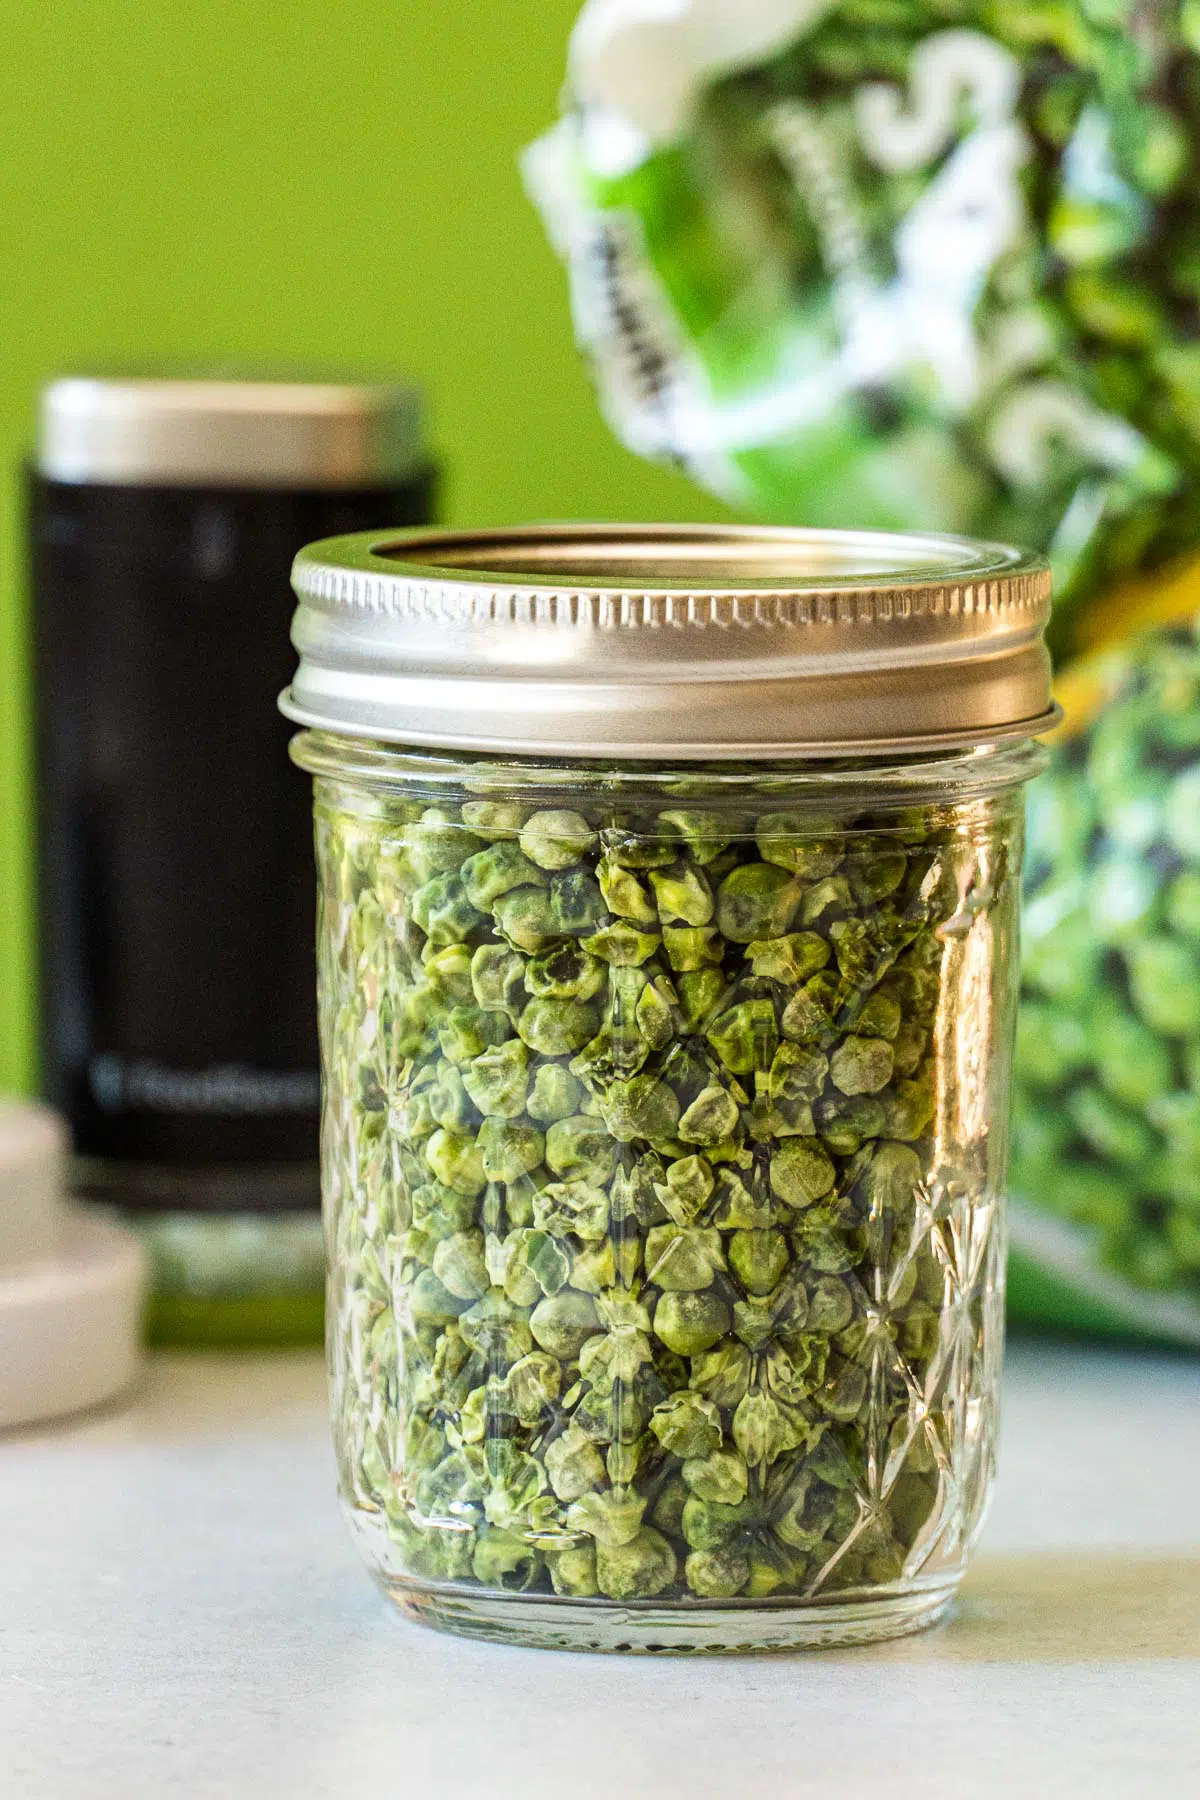 Dehydrated peas in a glass jar